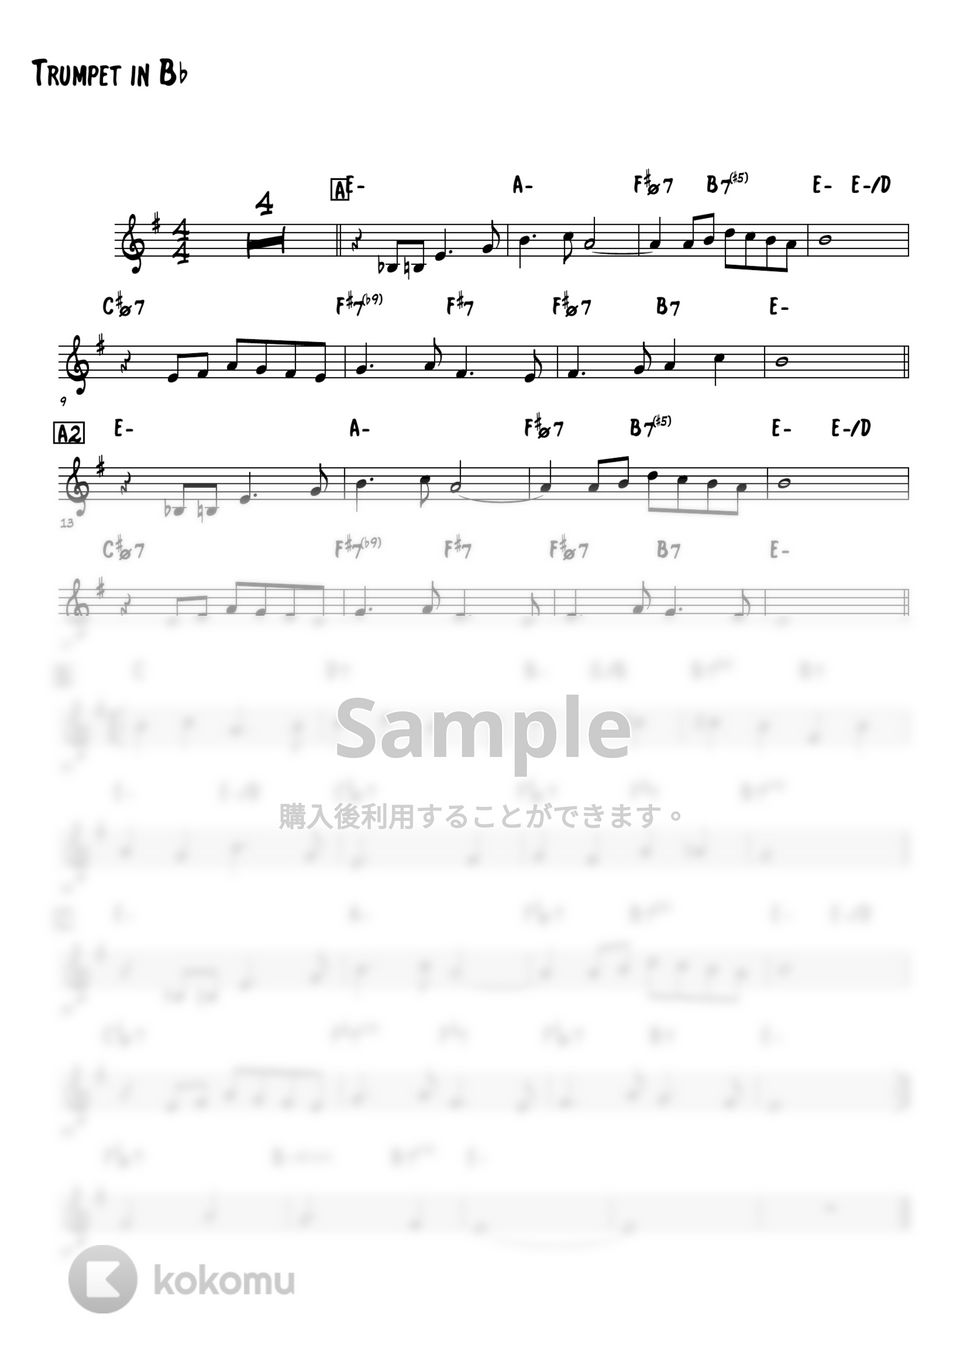 Henry Mancini - 映画『ひまわり』のテーマ (トランペット(Bb楽器)メロディー楽譜) by 高田将利